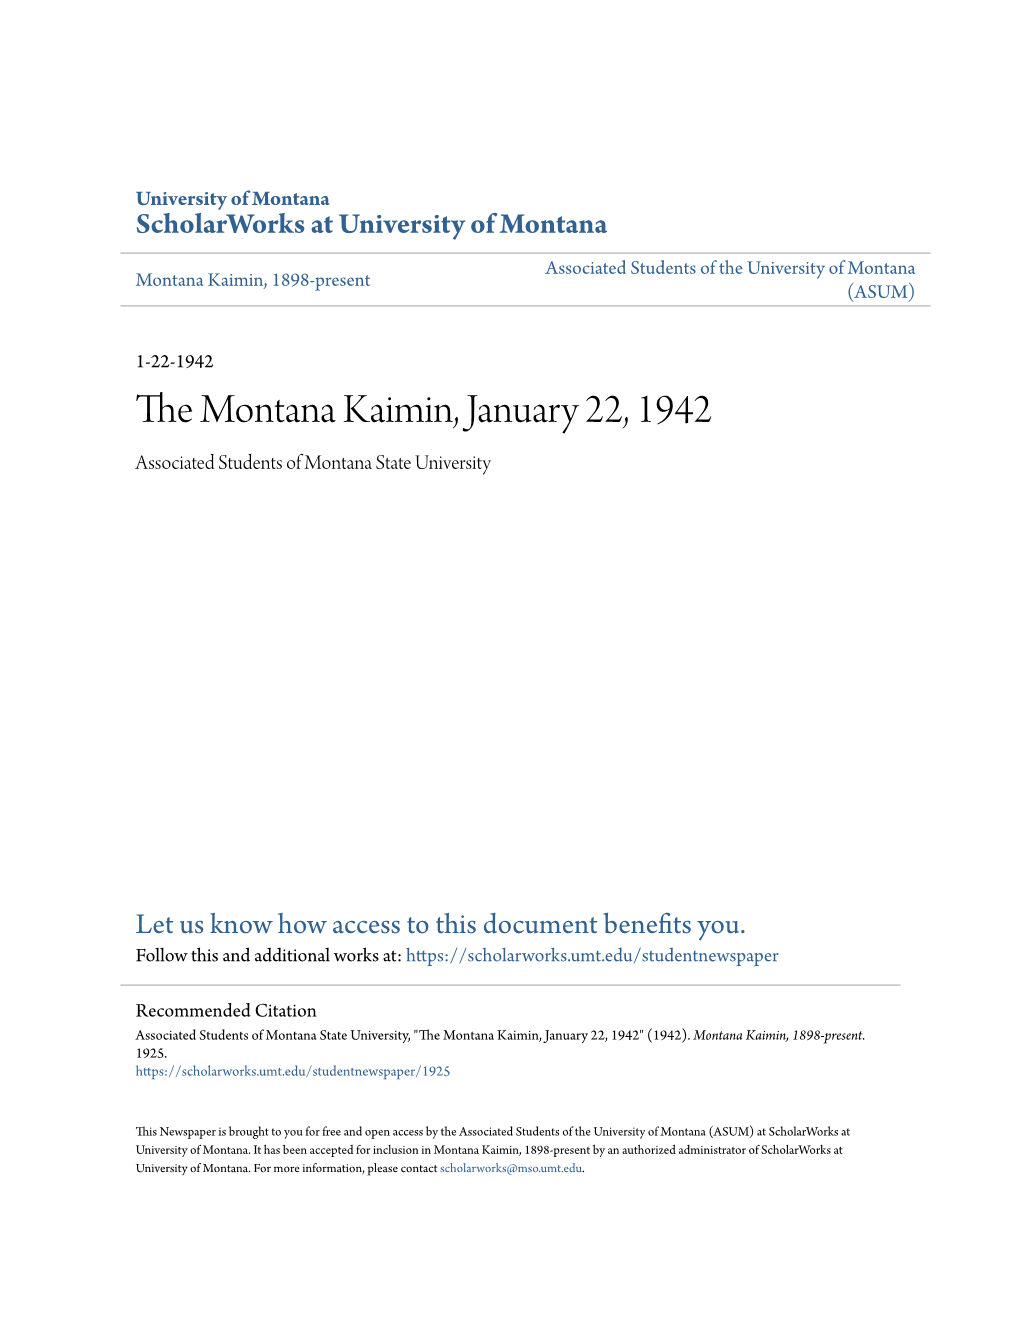 The Montana Kaimin, January 22, 1942